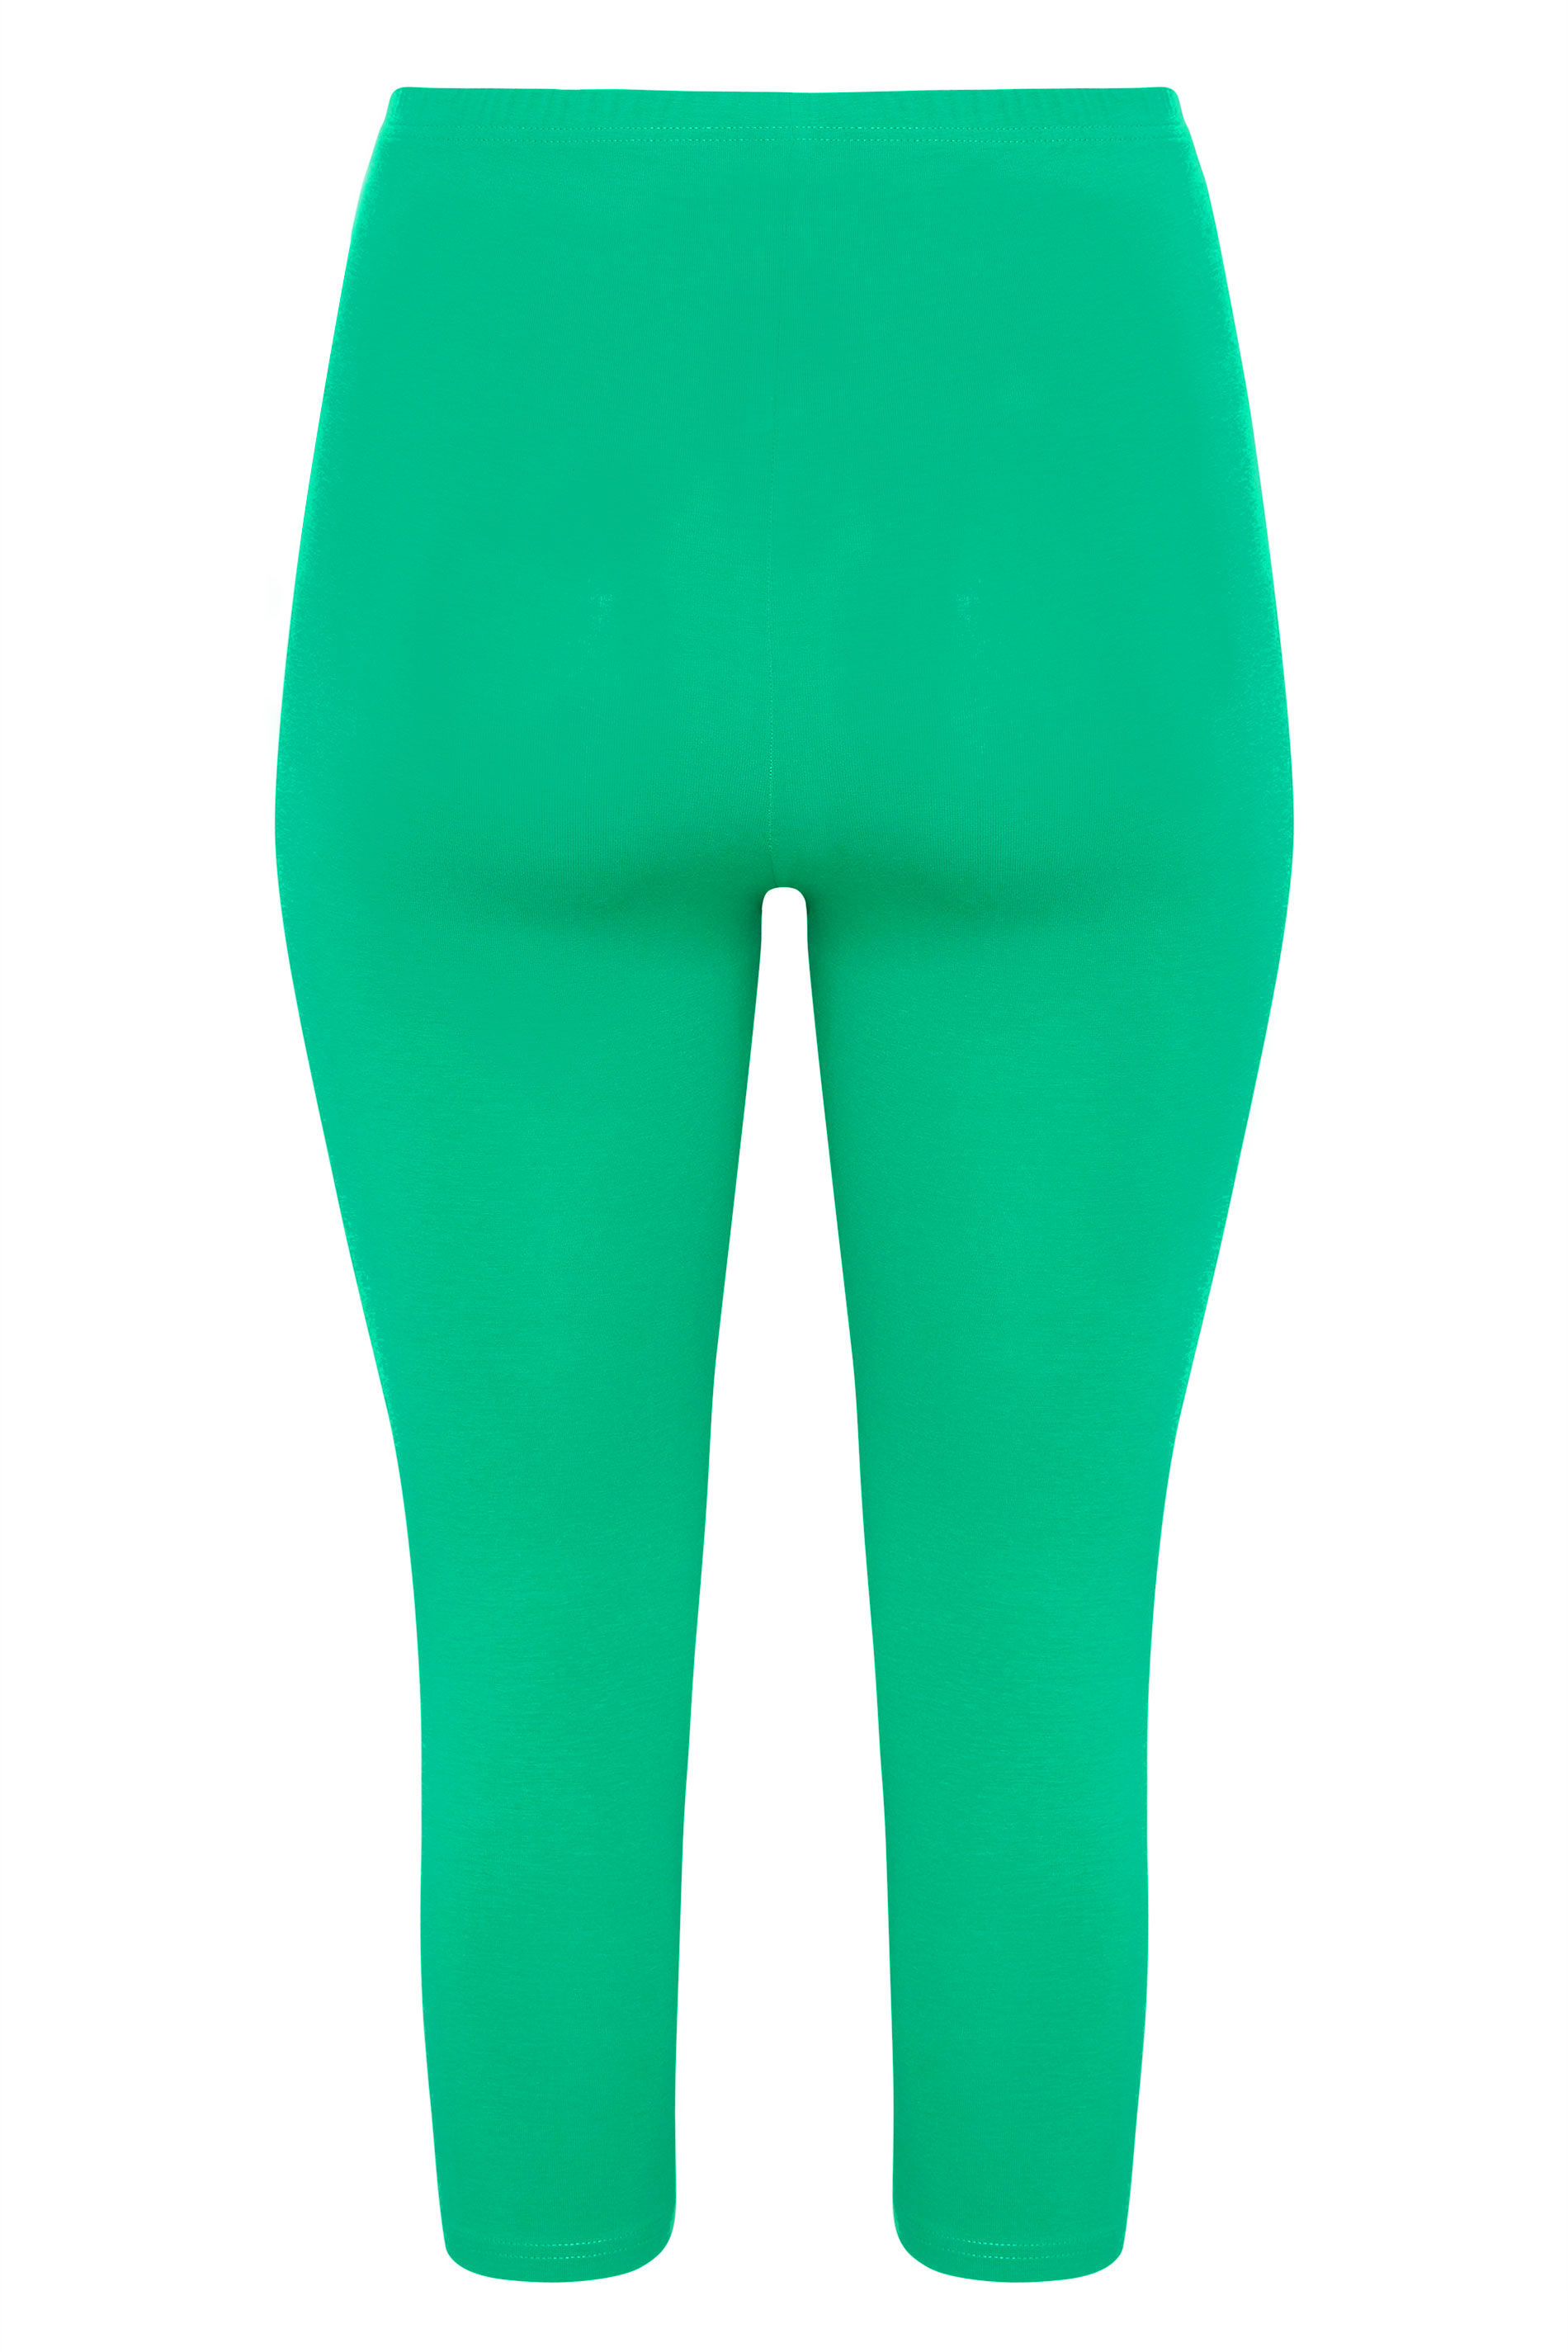 Lularoe TC Bright Floral Leggings Orange Pink Green Polyester Blend Tall &  Curvy | eBay